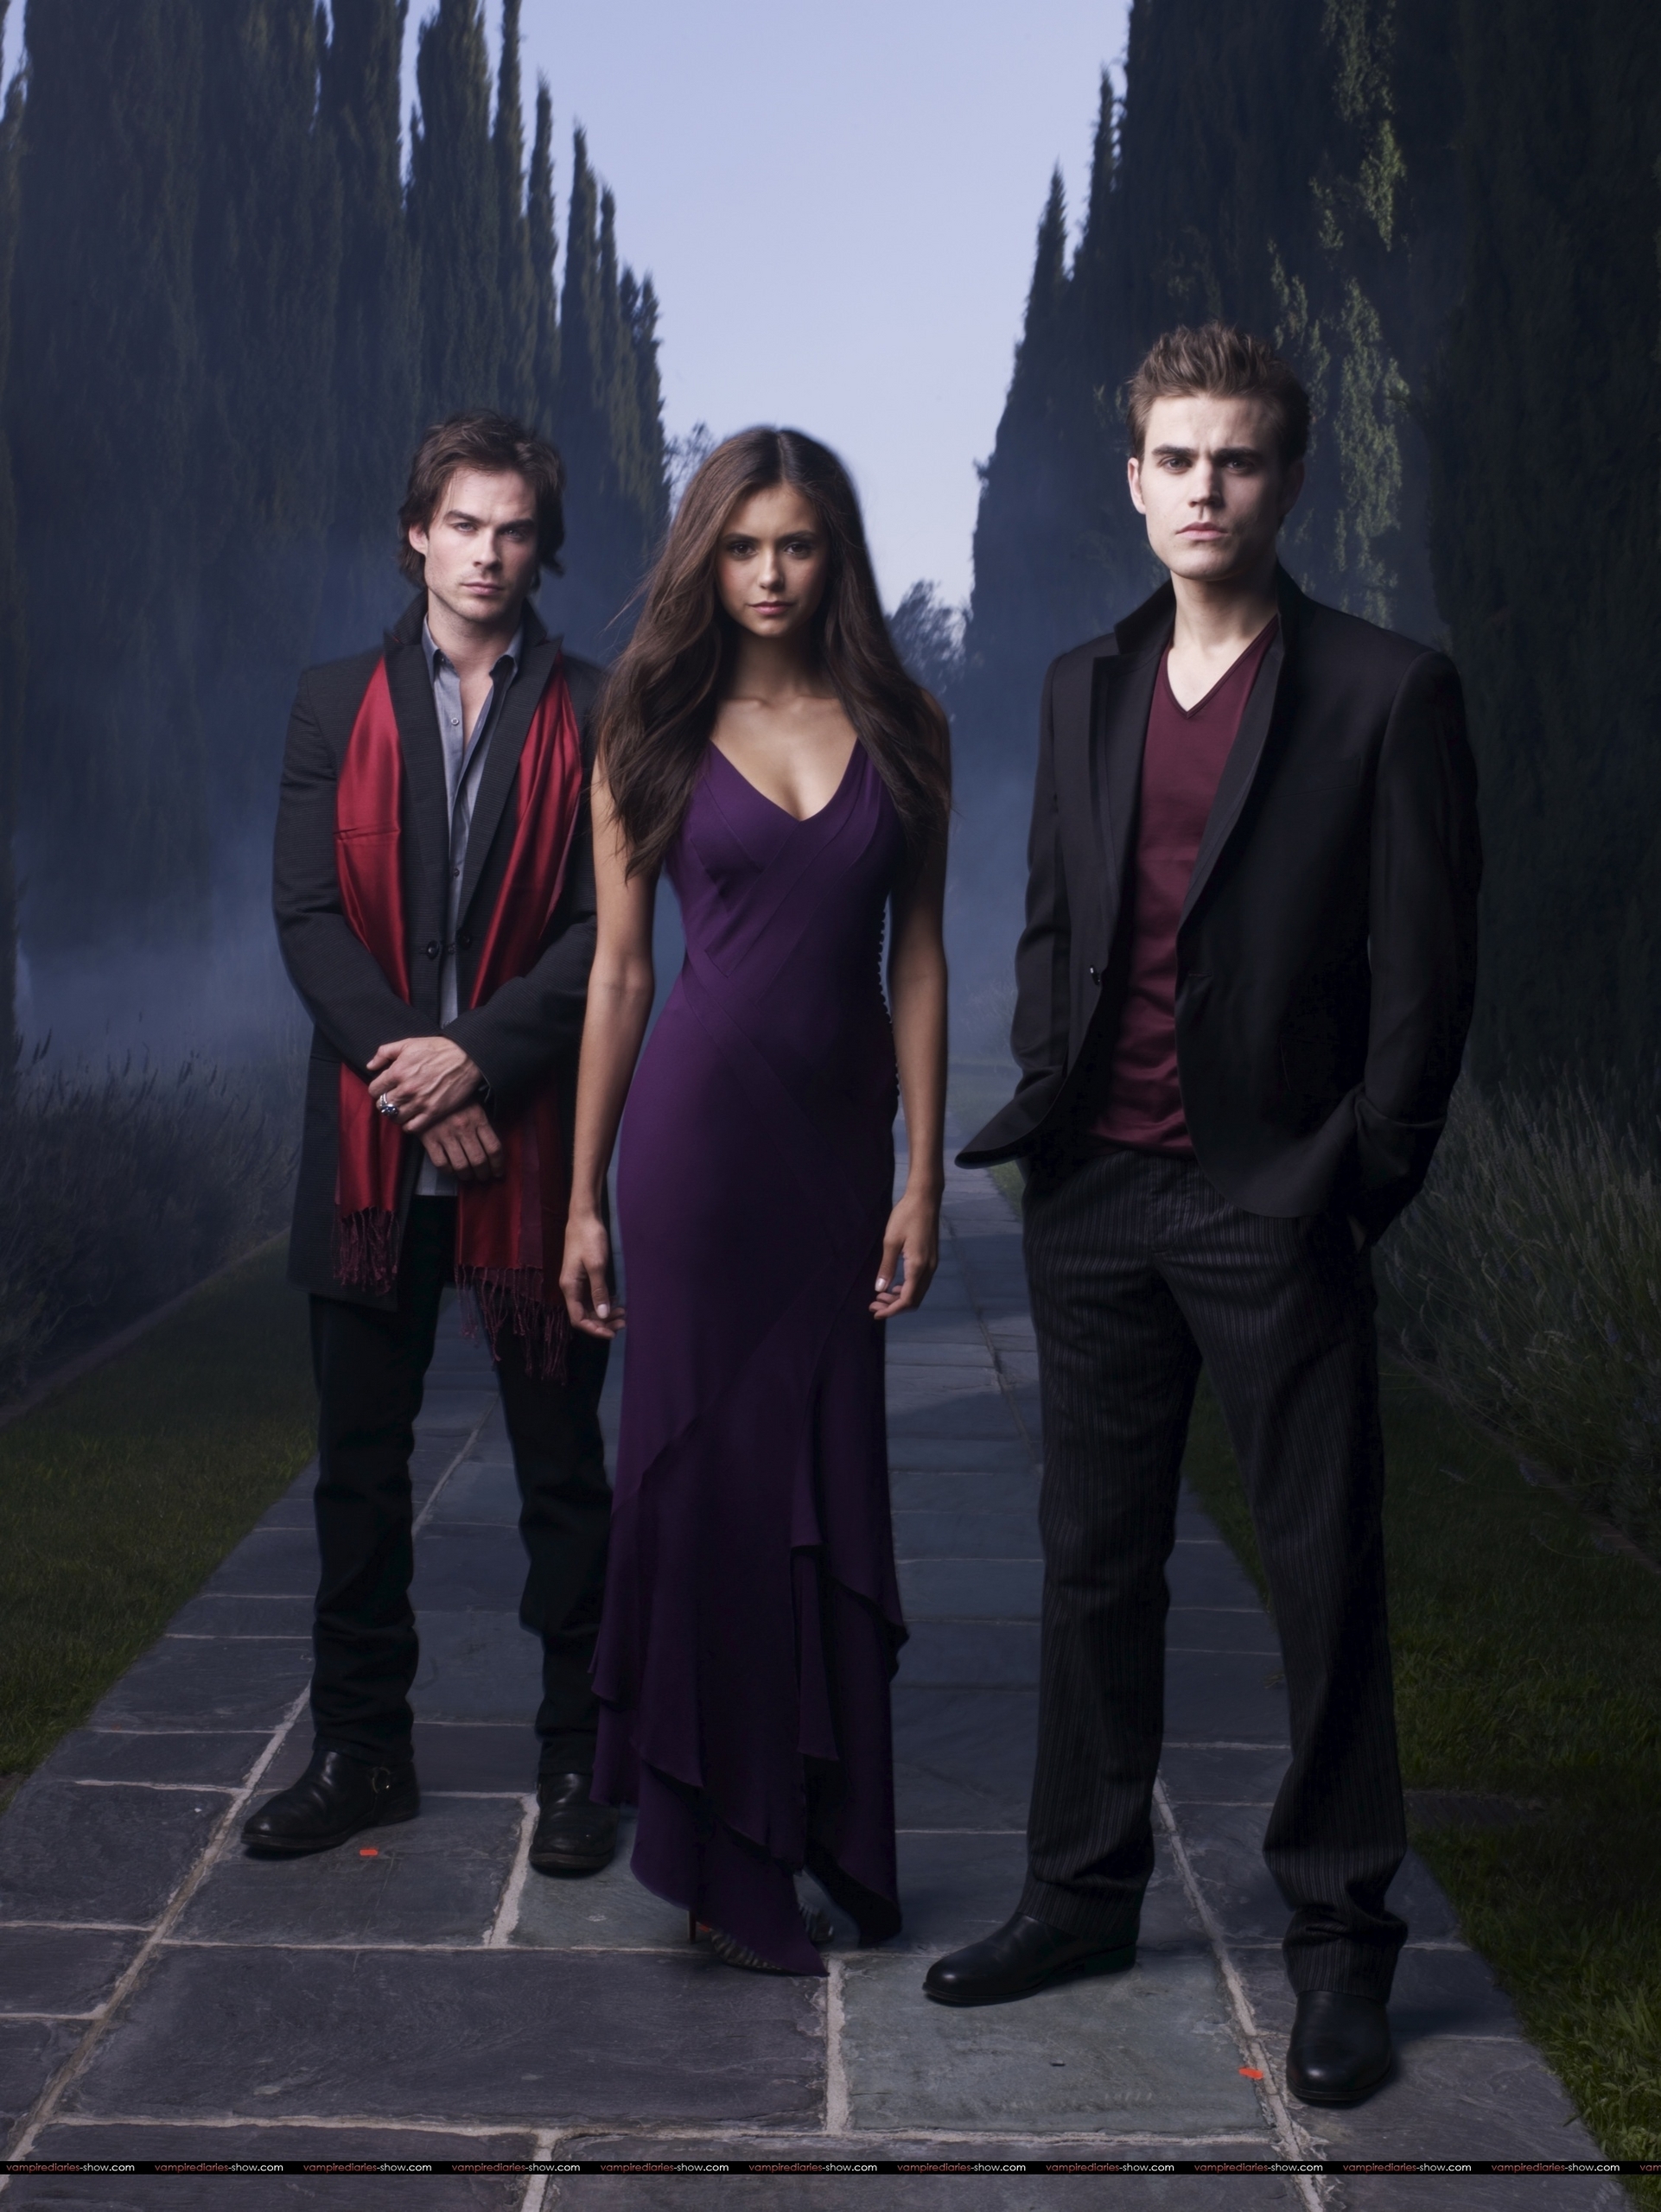 vampire diaries season 1 complete download